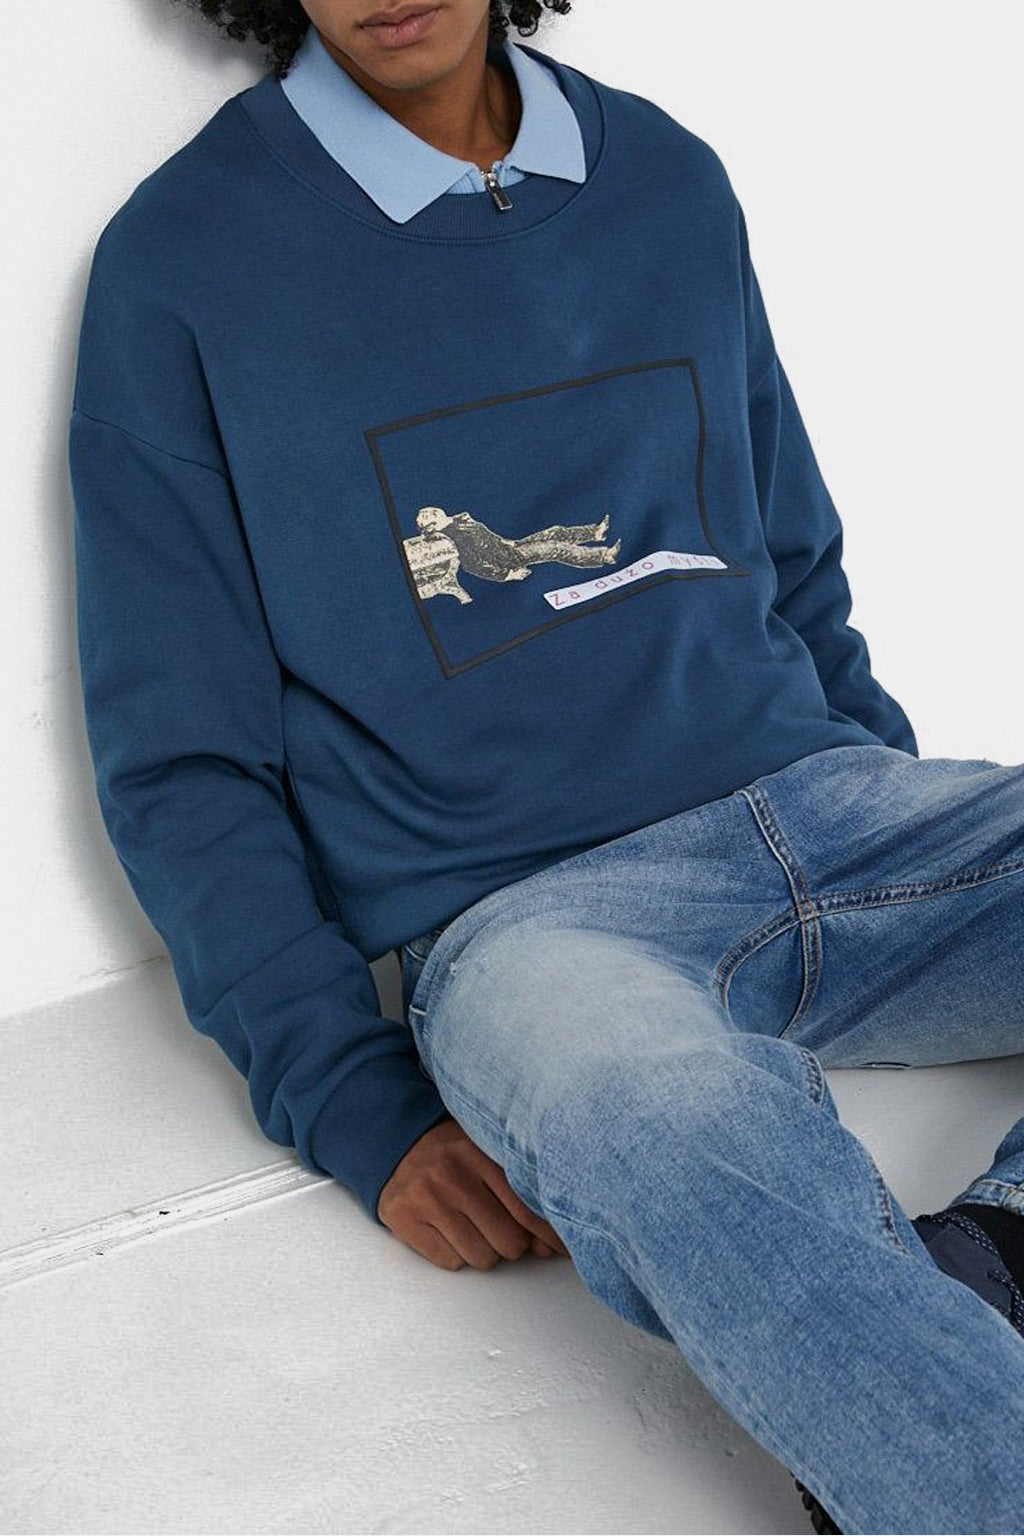 Medicine - Men's navy blue knitted sweatshirt from the Possibilities collection - Wisława Szymborska Foundation